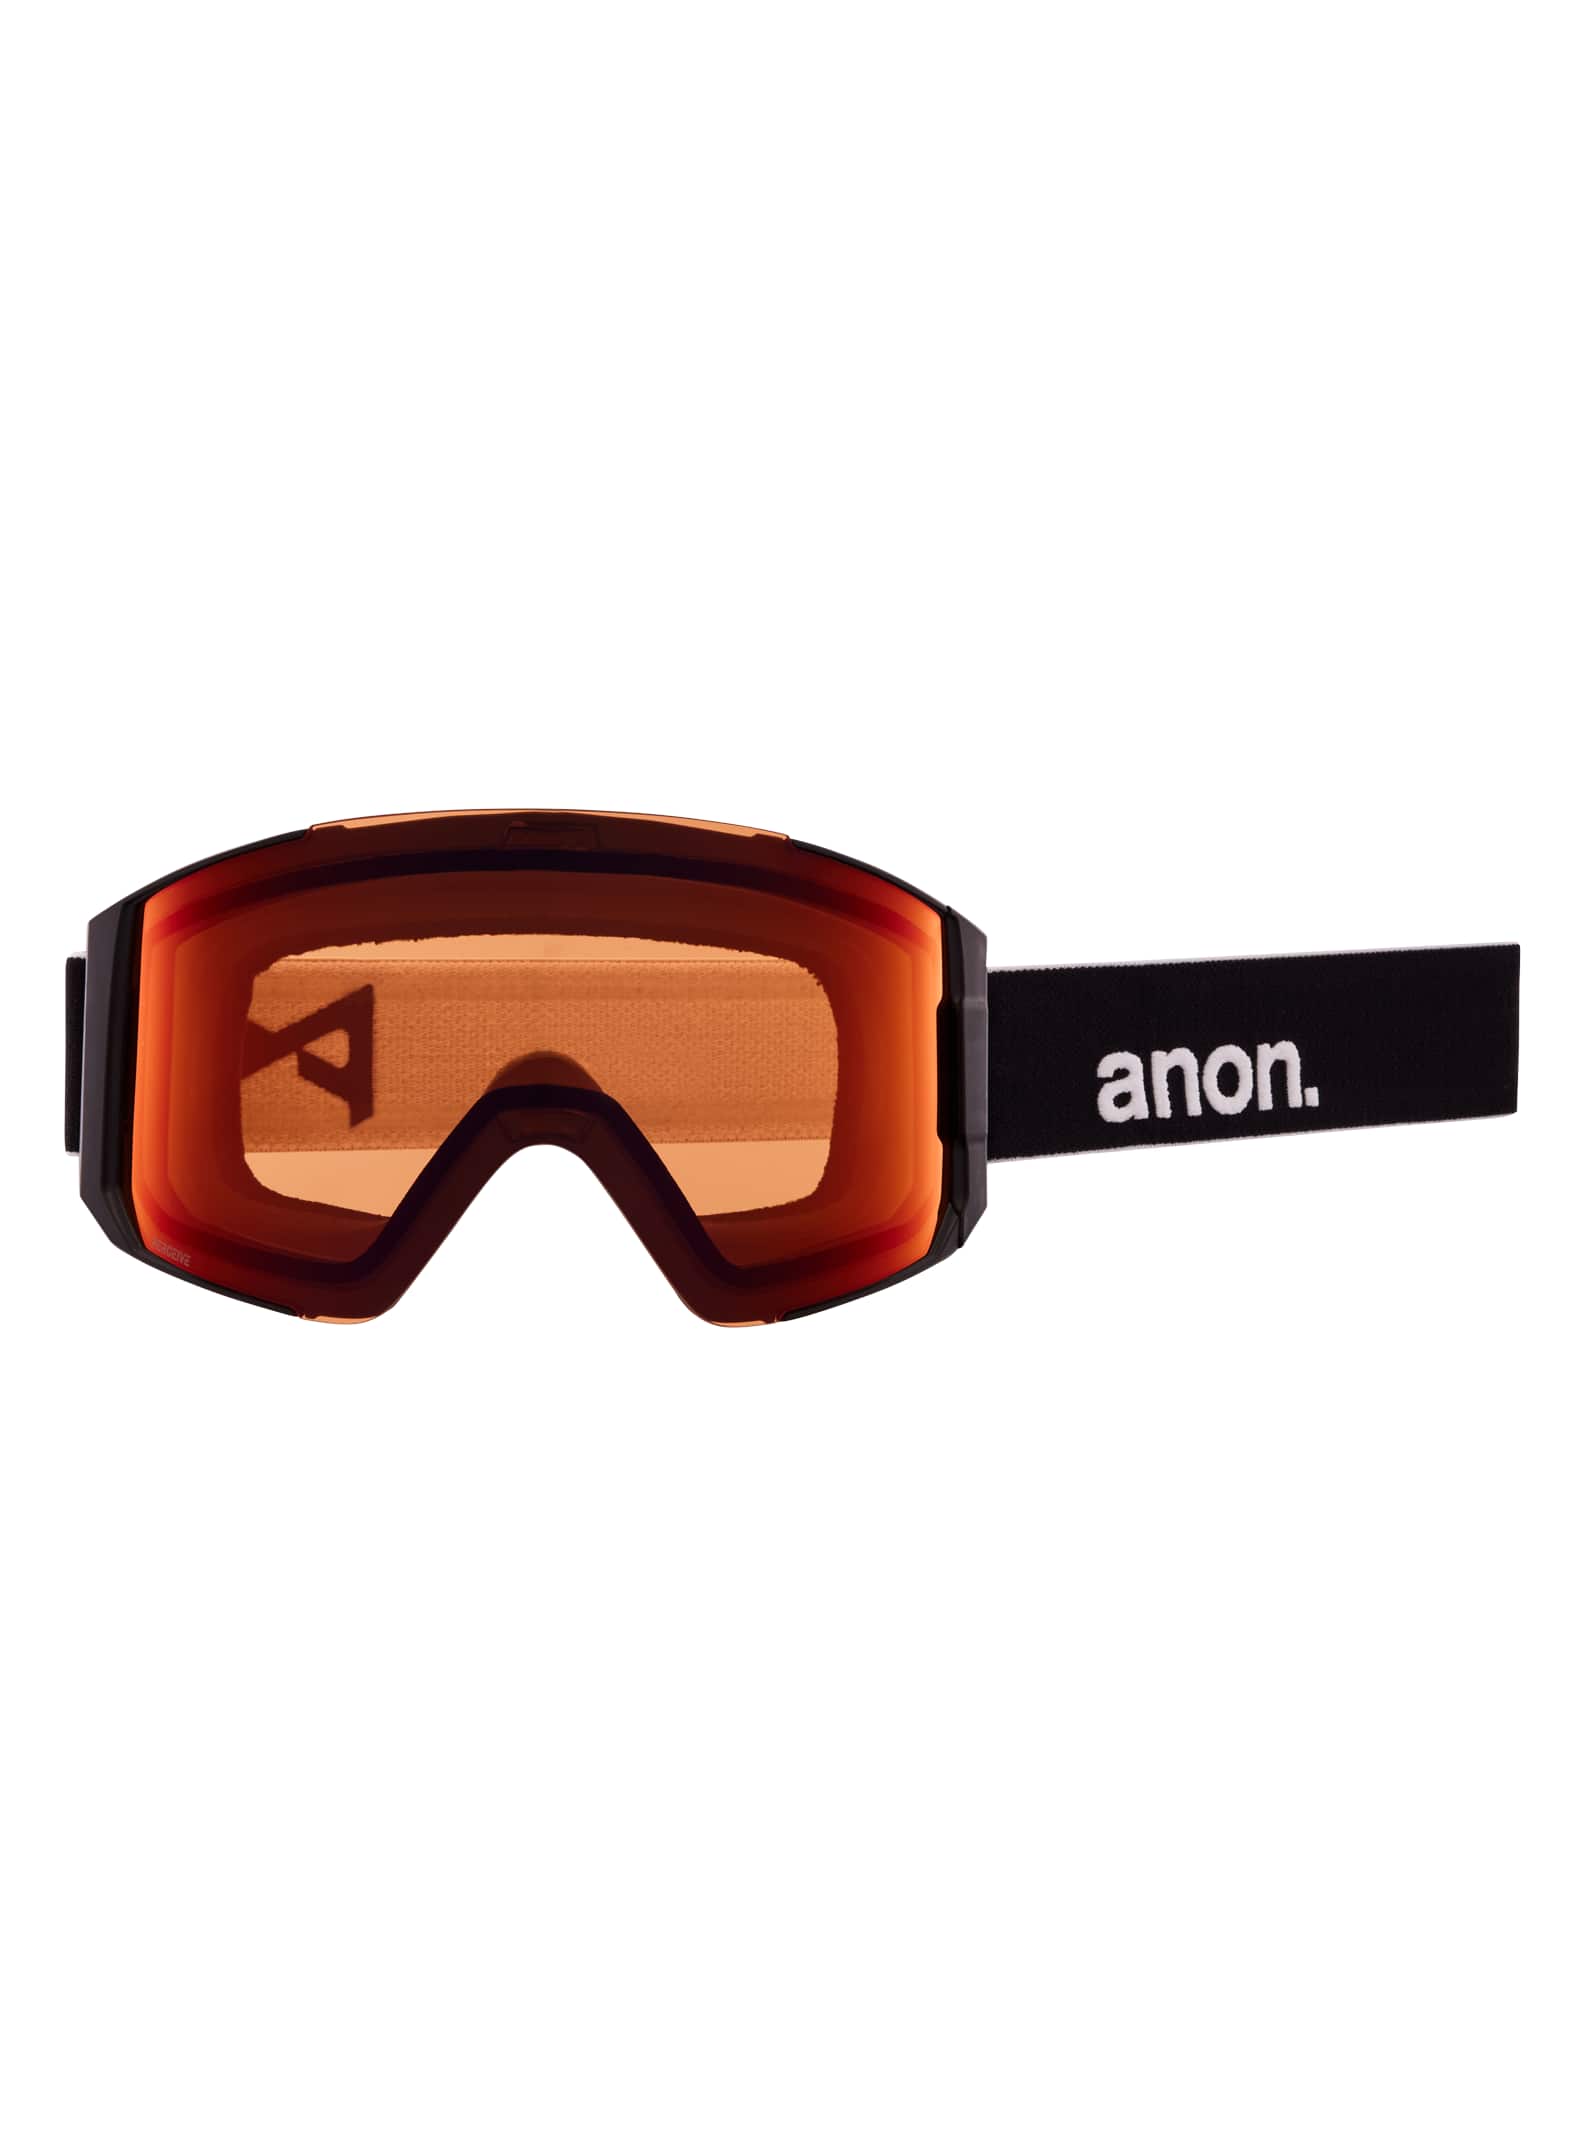 Anon Anon Sync Goggles + Bonus Lens Frame: black, lens: perceive sunny red (14% / s3), spare lens: perceive cloudy burst (59% / s1)